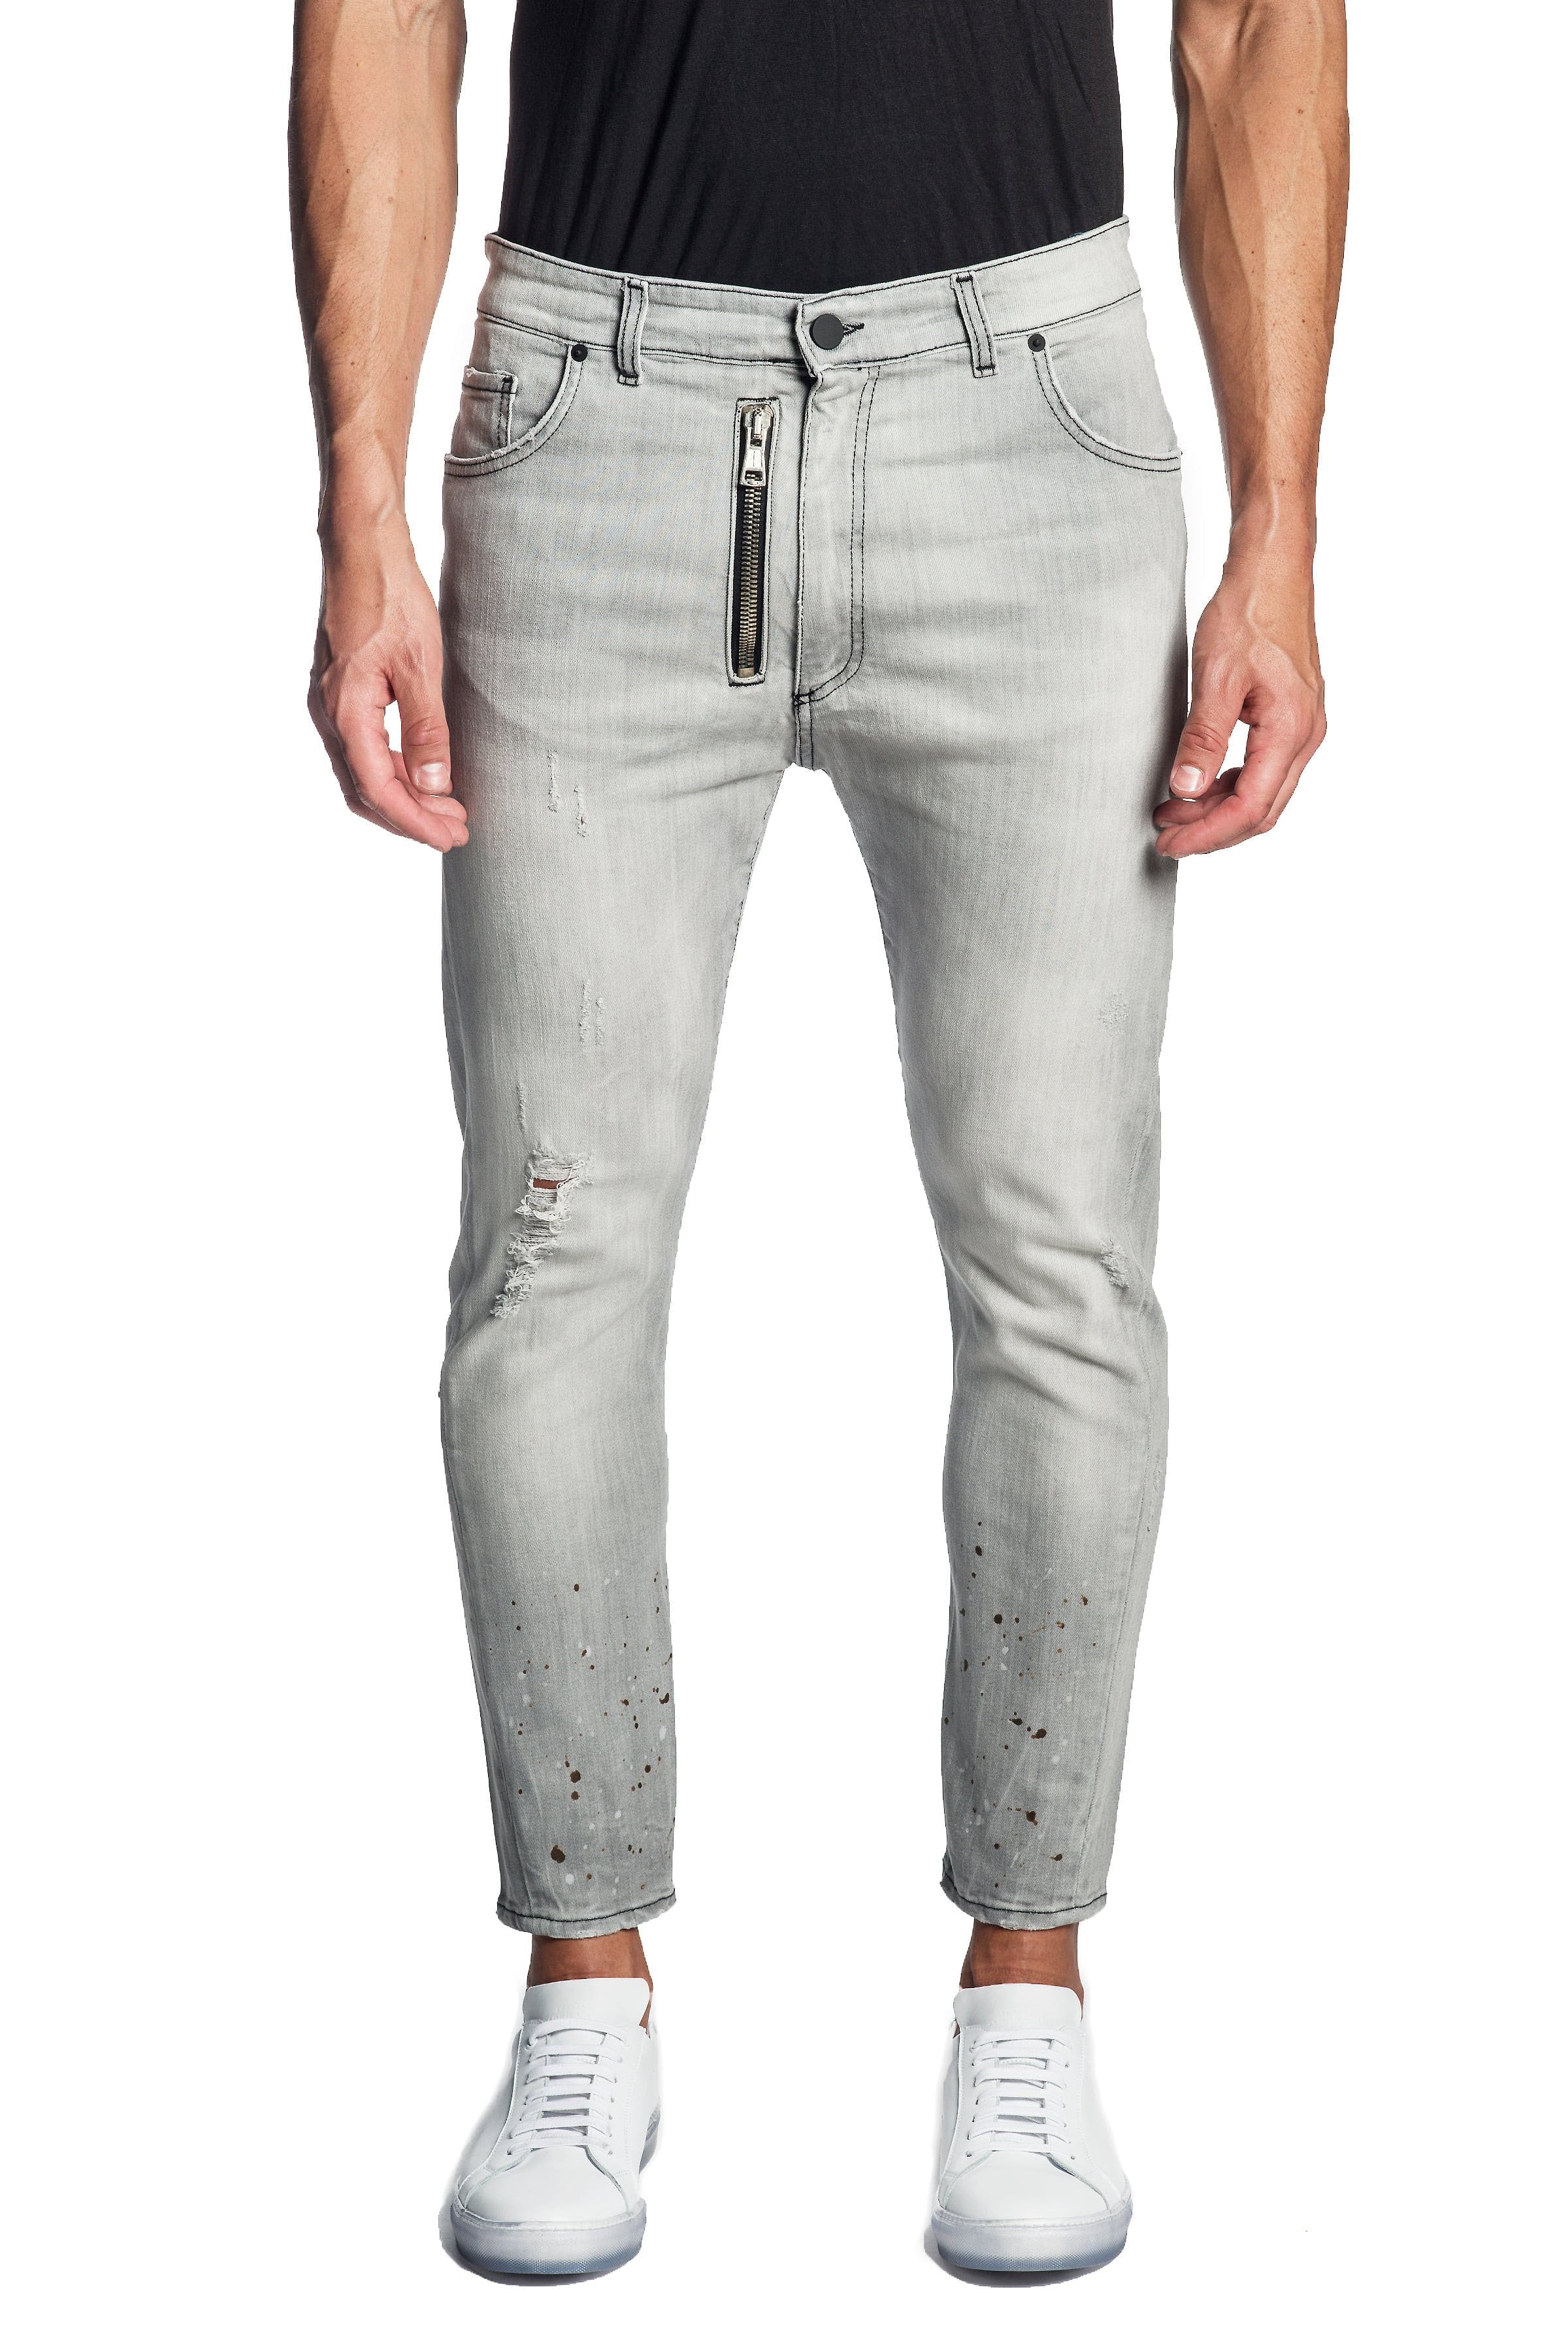 Spykar Light Grey Cotton Comfort Fit Straight Length Jeans For Men  (Ricardo) - rc02bb06ltgrey